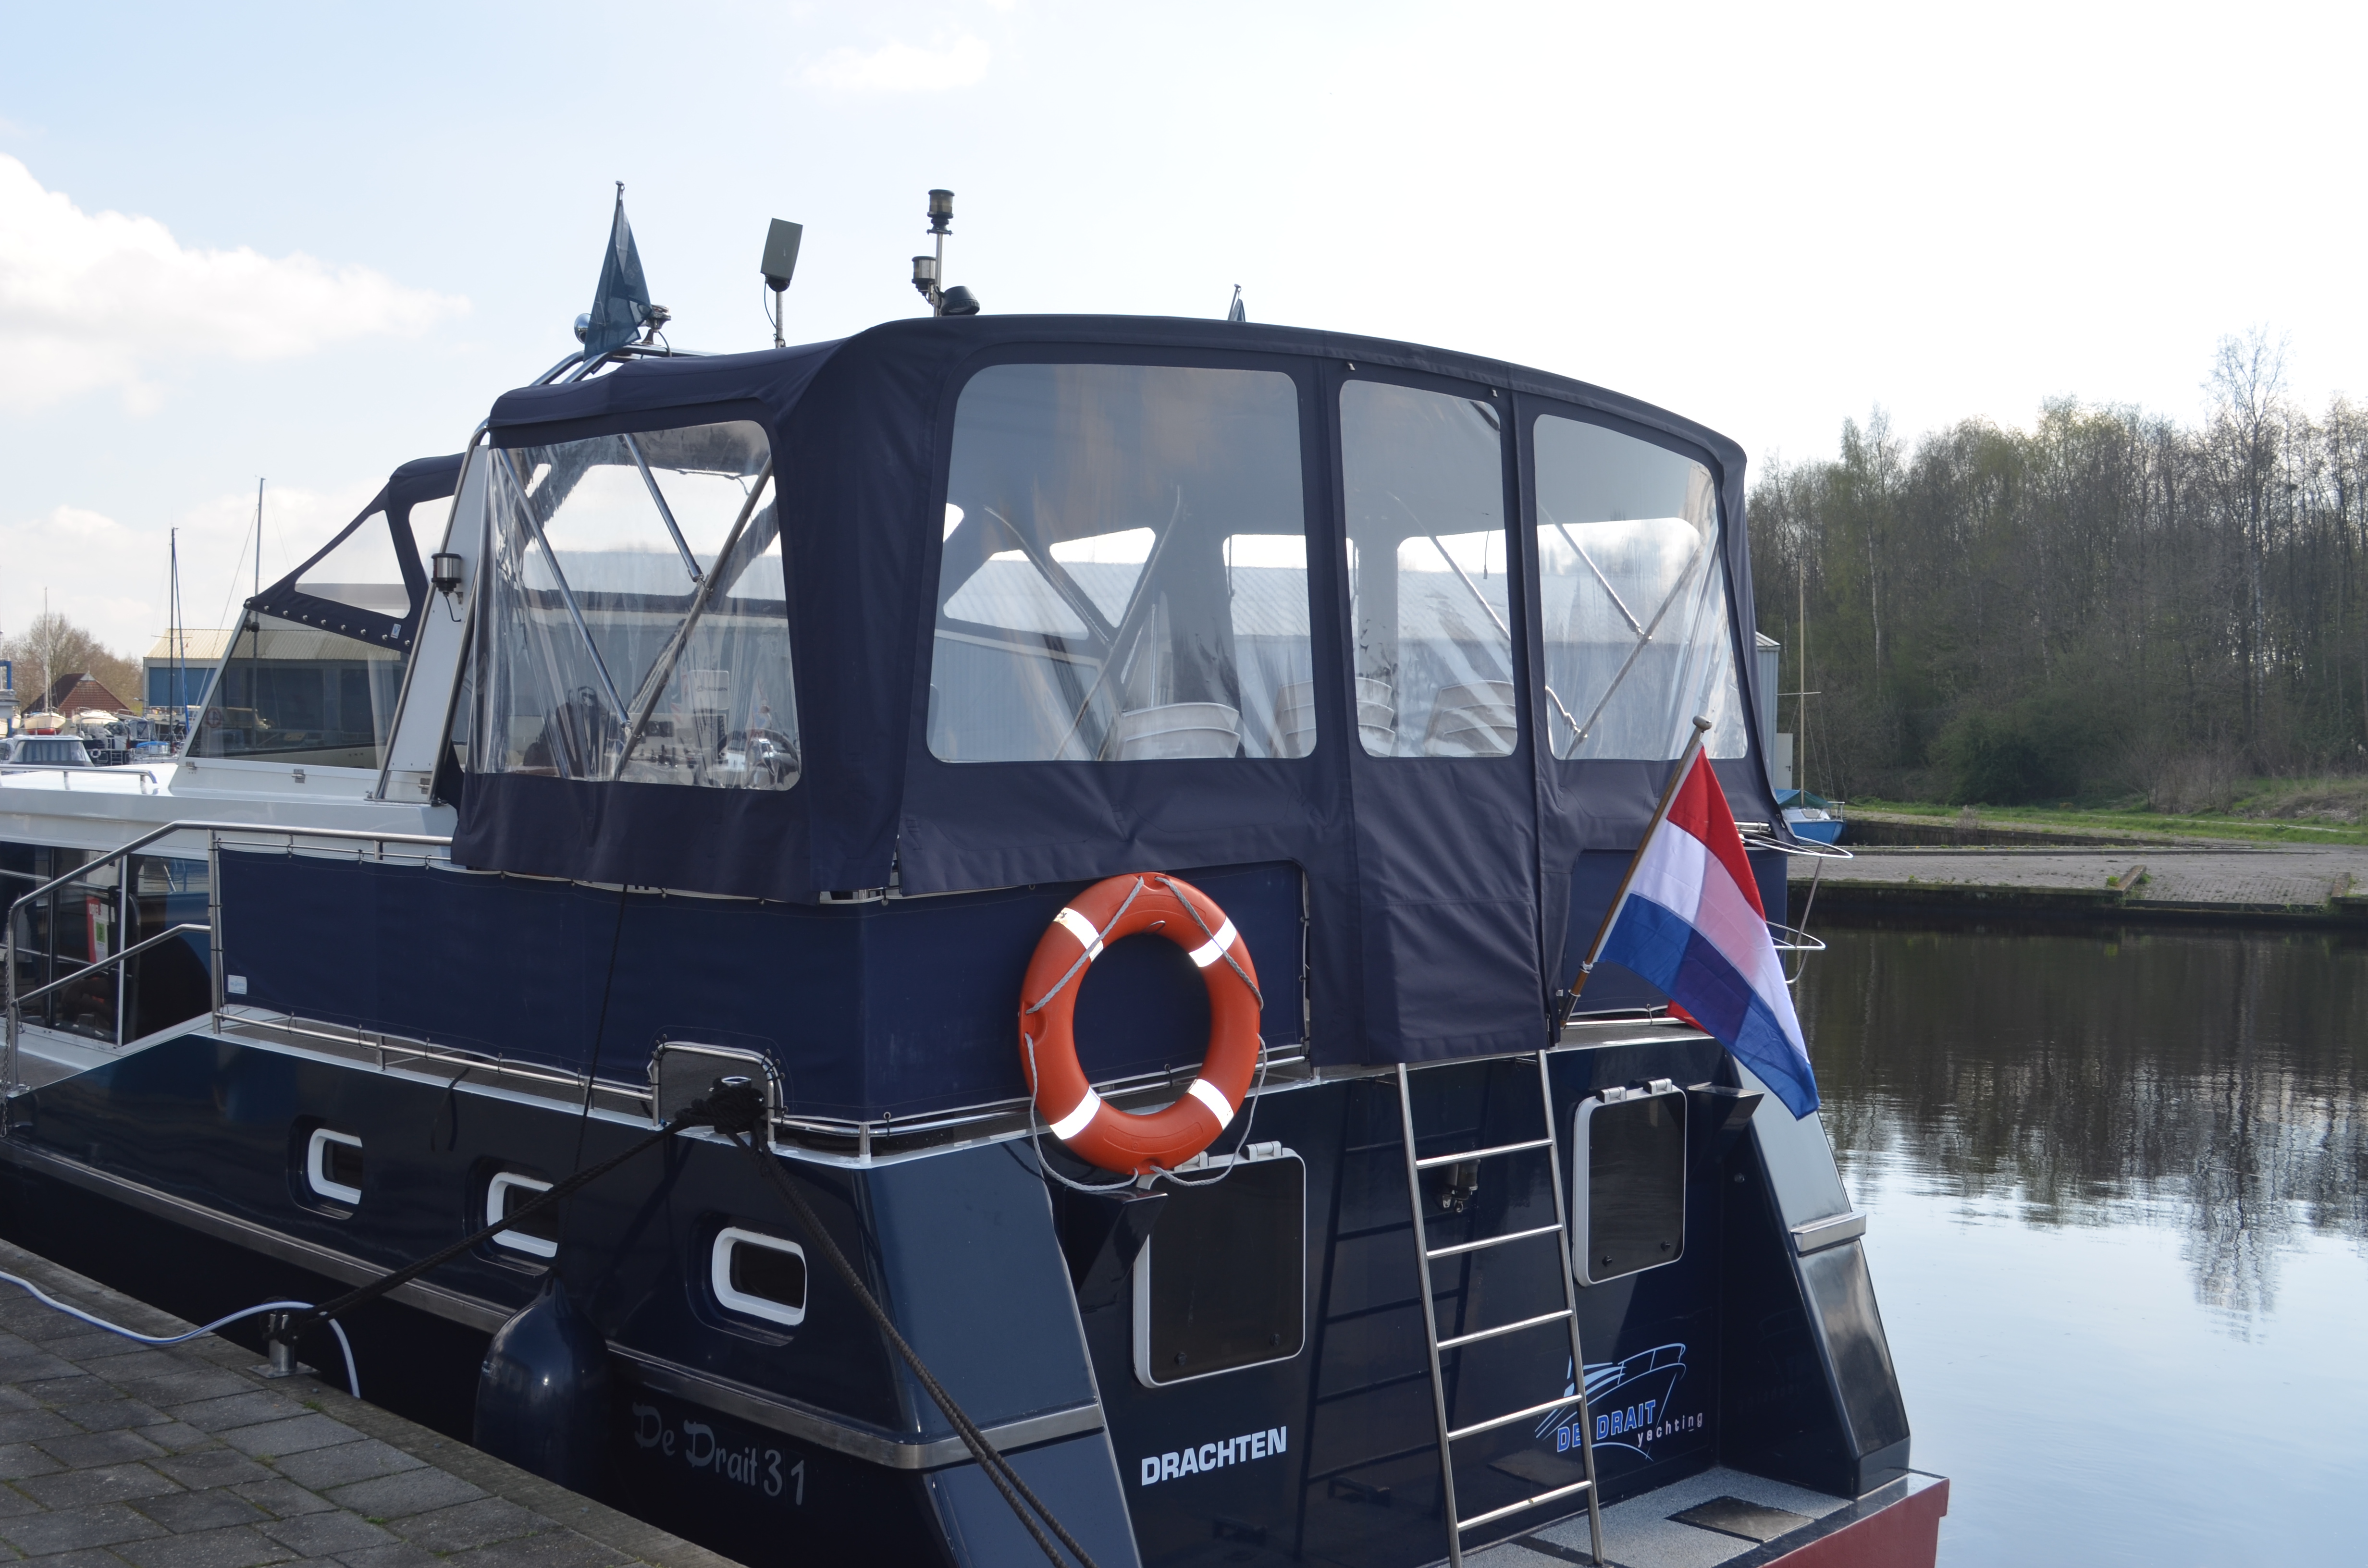 45 - Yacht Charter Drachten & Boat hire in Netherlands Drachten Jachthaven Drachten de Drait 3